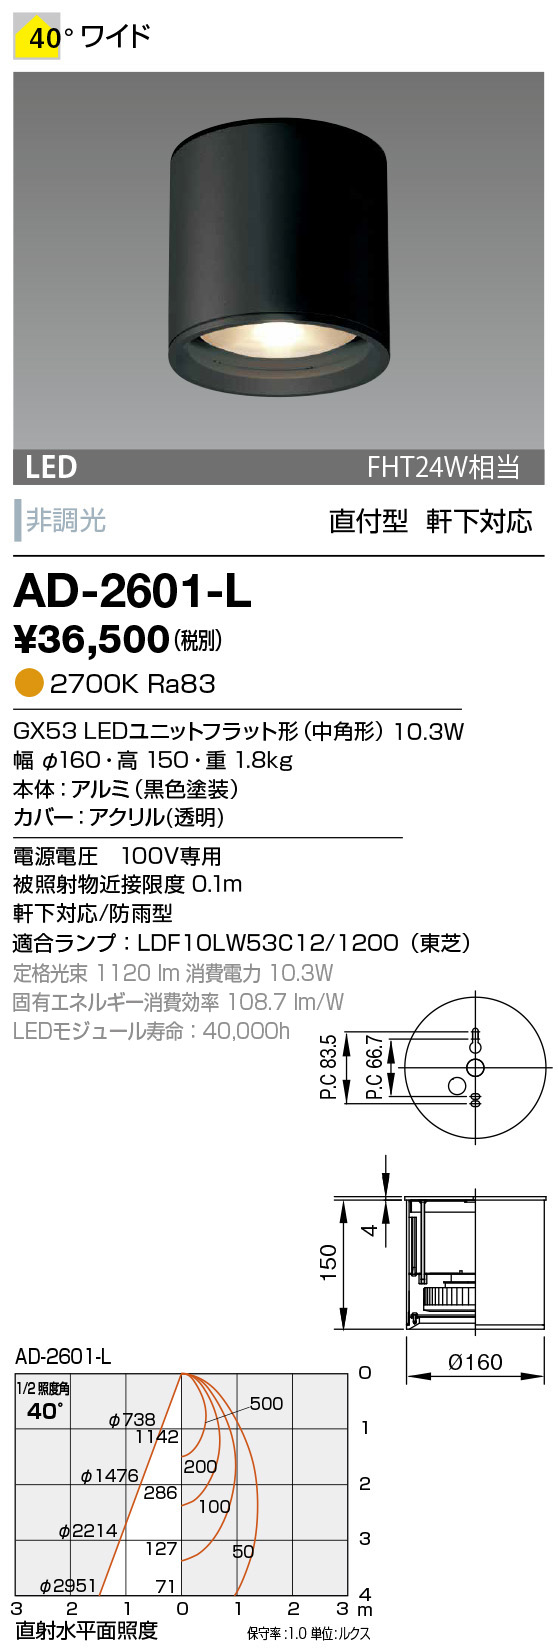 AD-2601-L(山田照明) 商品詳細 ～ 照明器具・換気扇他、電設資材販売のブライト